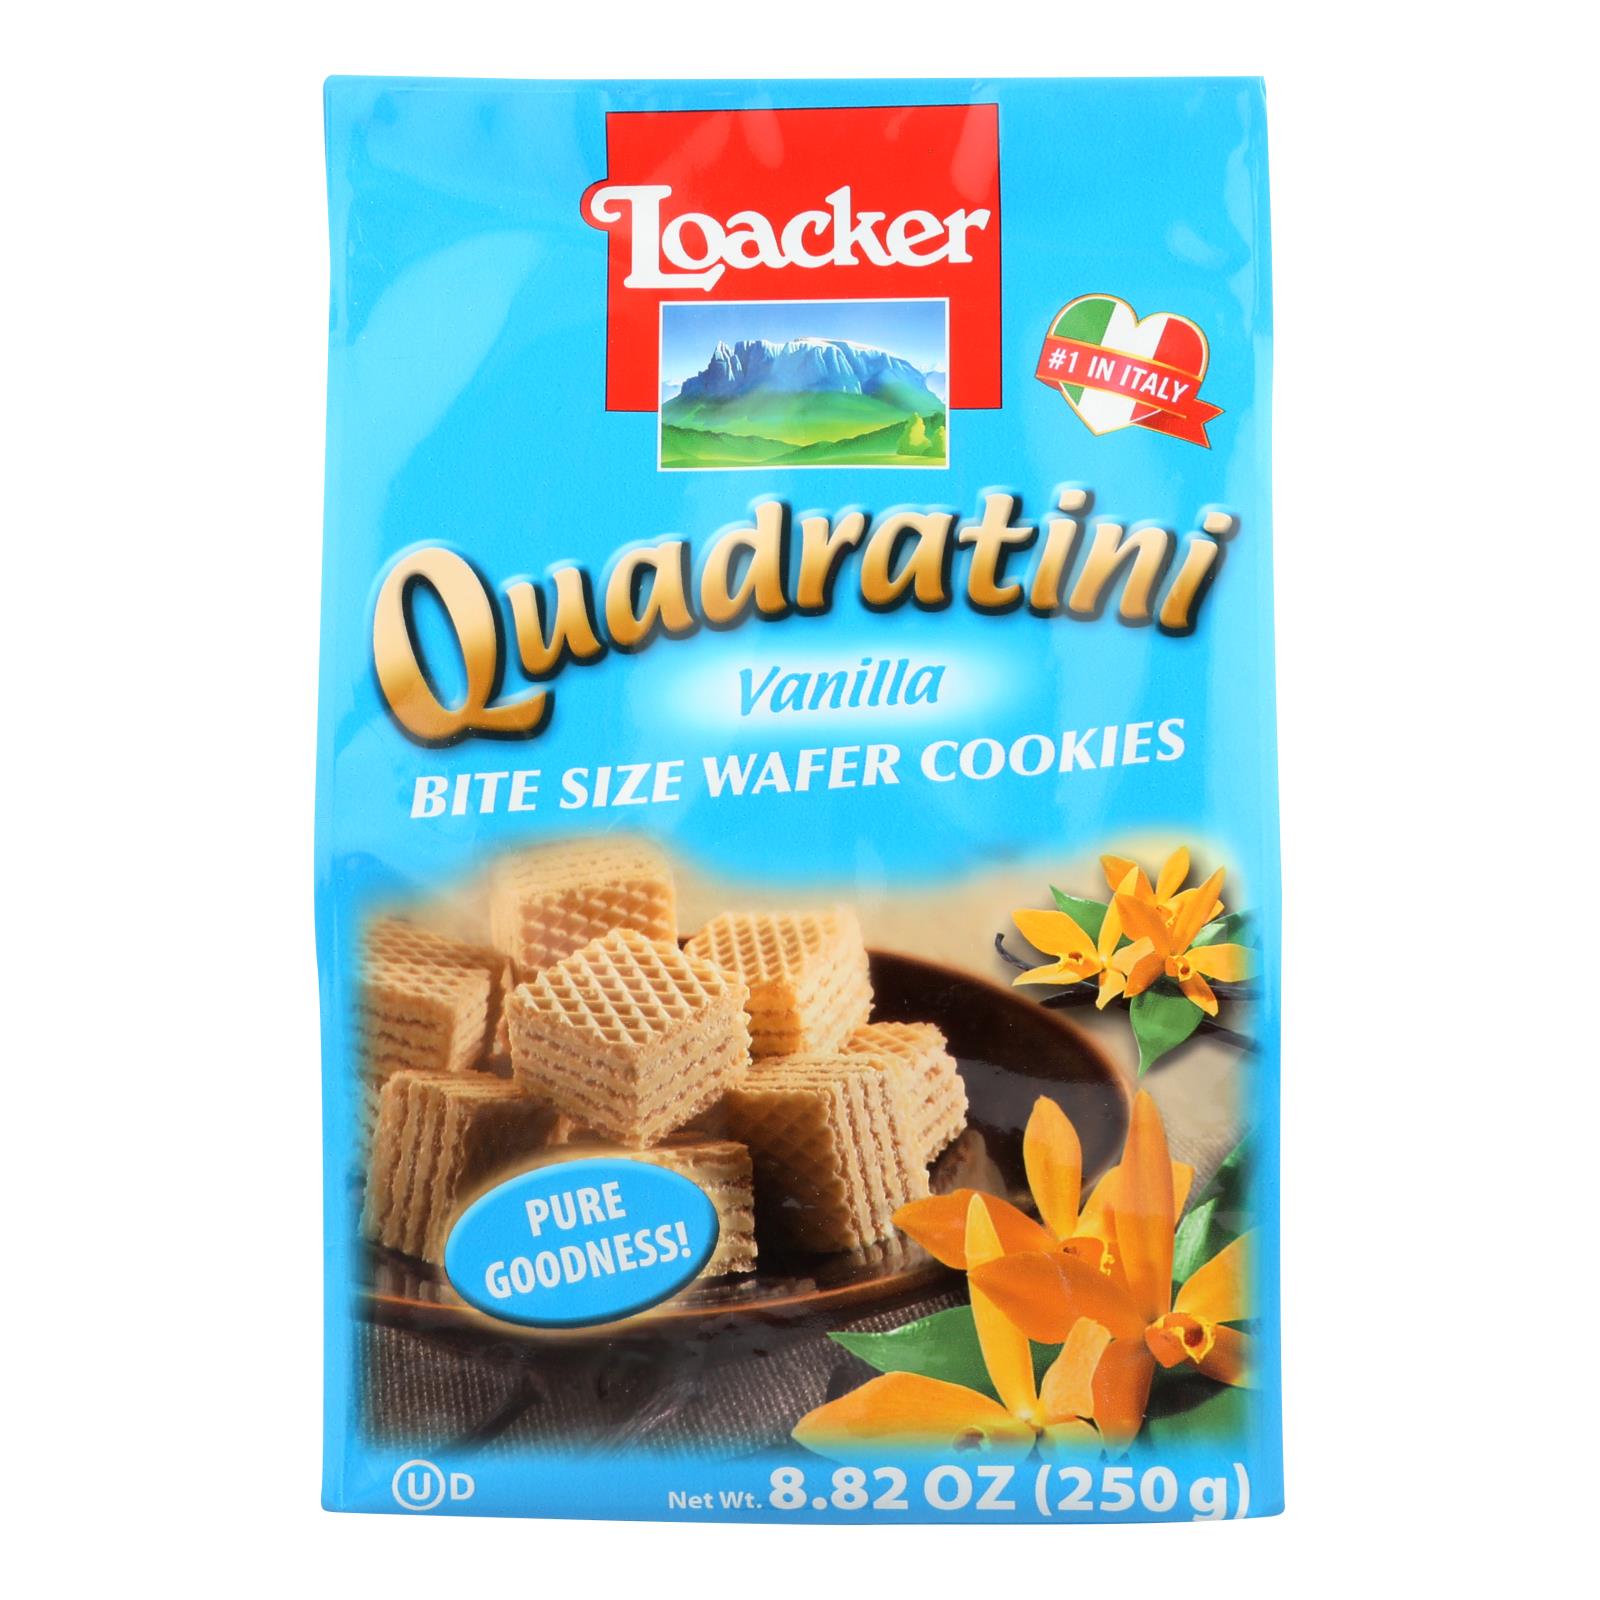 Loacker Quadratini Vanilla Wafer Cookies - 6개 묶음상품 - 8.82 OZ